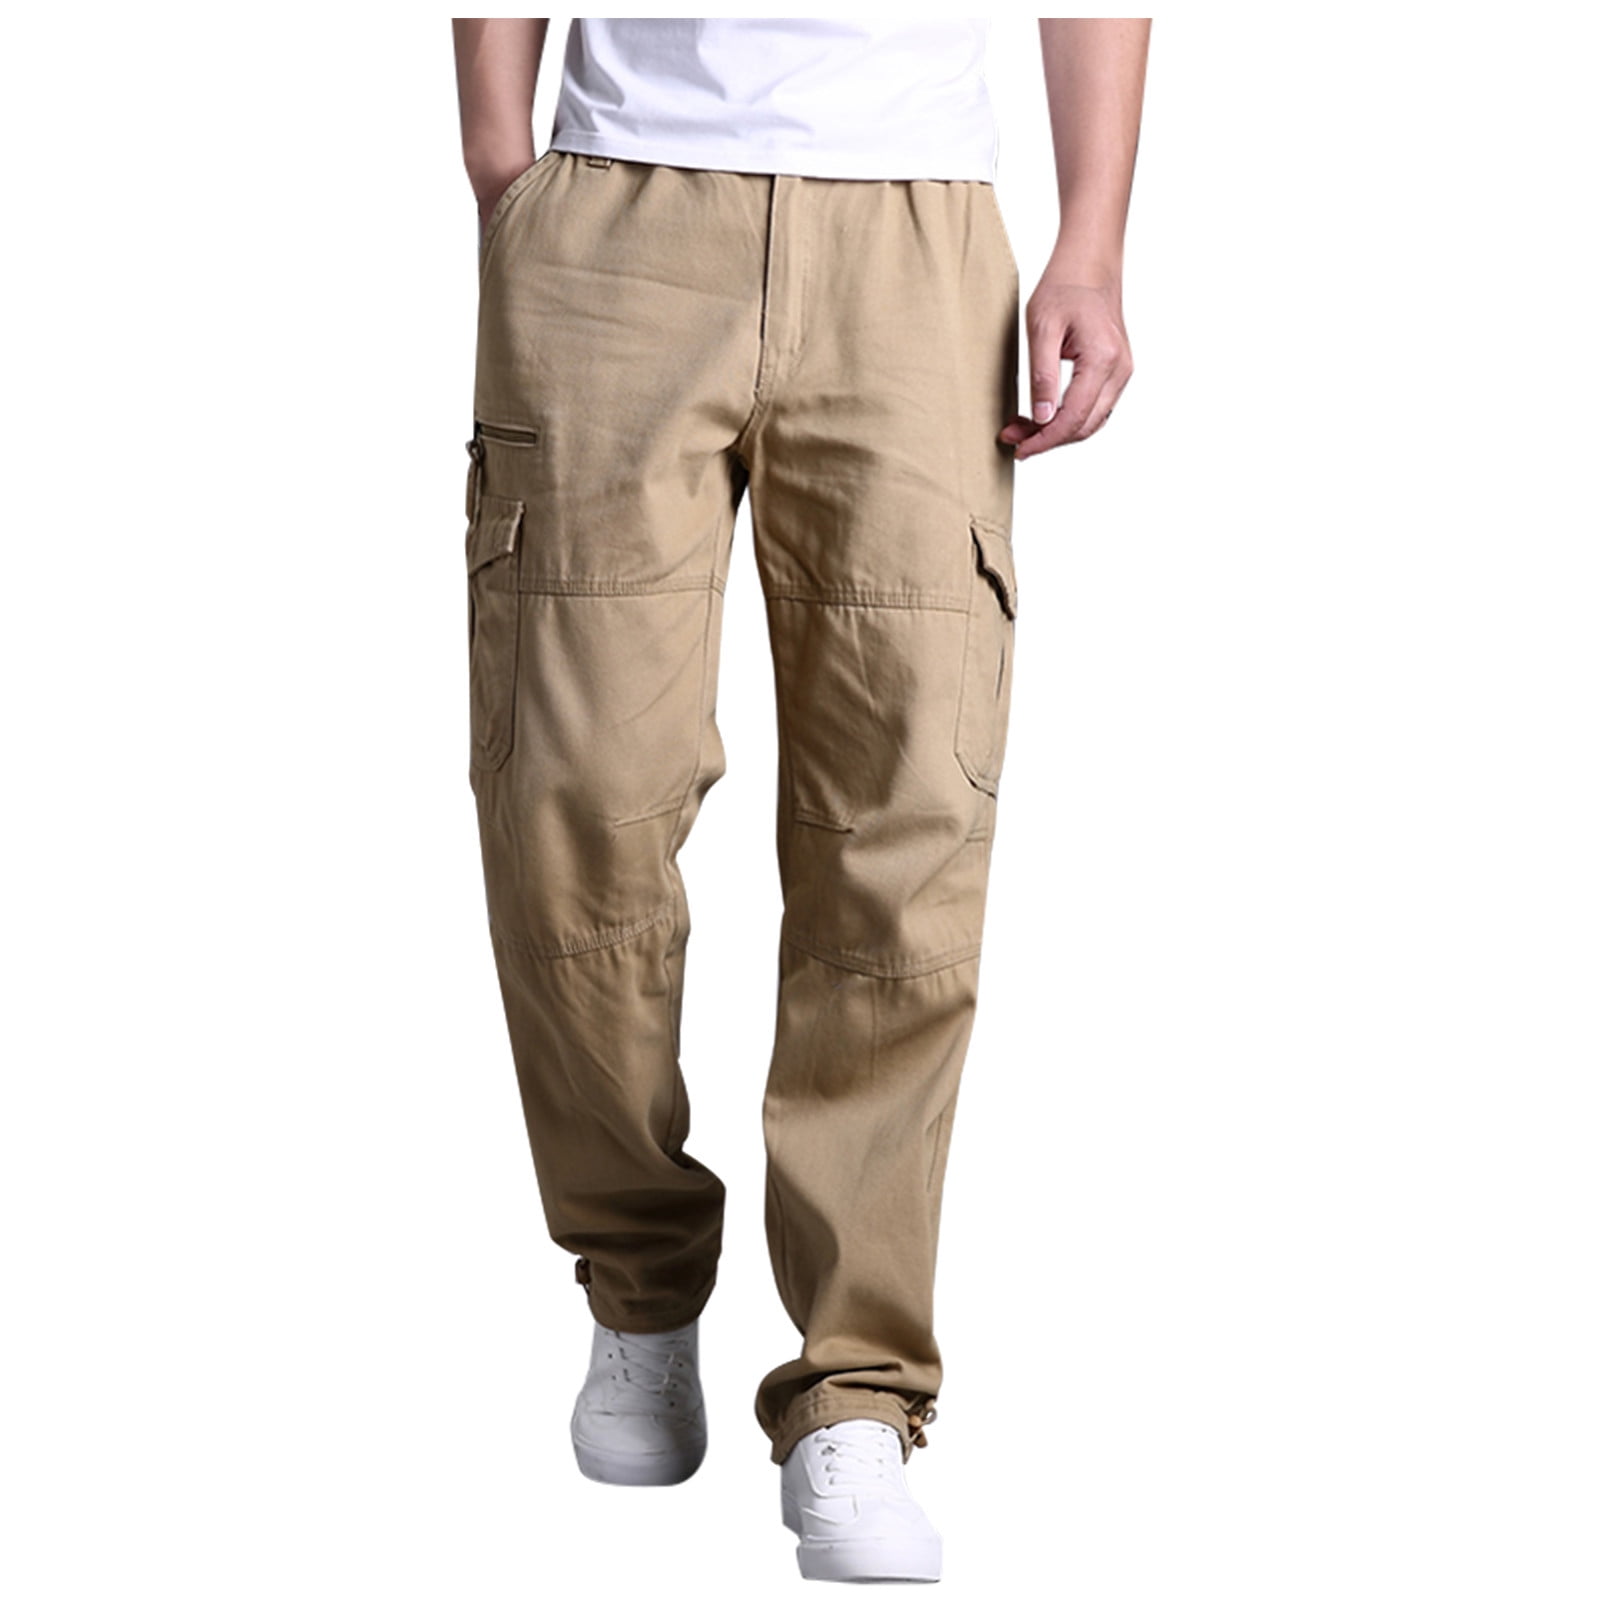 Juebong Men's Khaki Cargo Pants Classic Loose Fit Trousers Outdoor Casual  Work Pants Sweatpants with Multi-pocket, 4X-Large, Khaki 